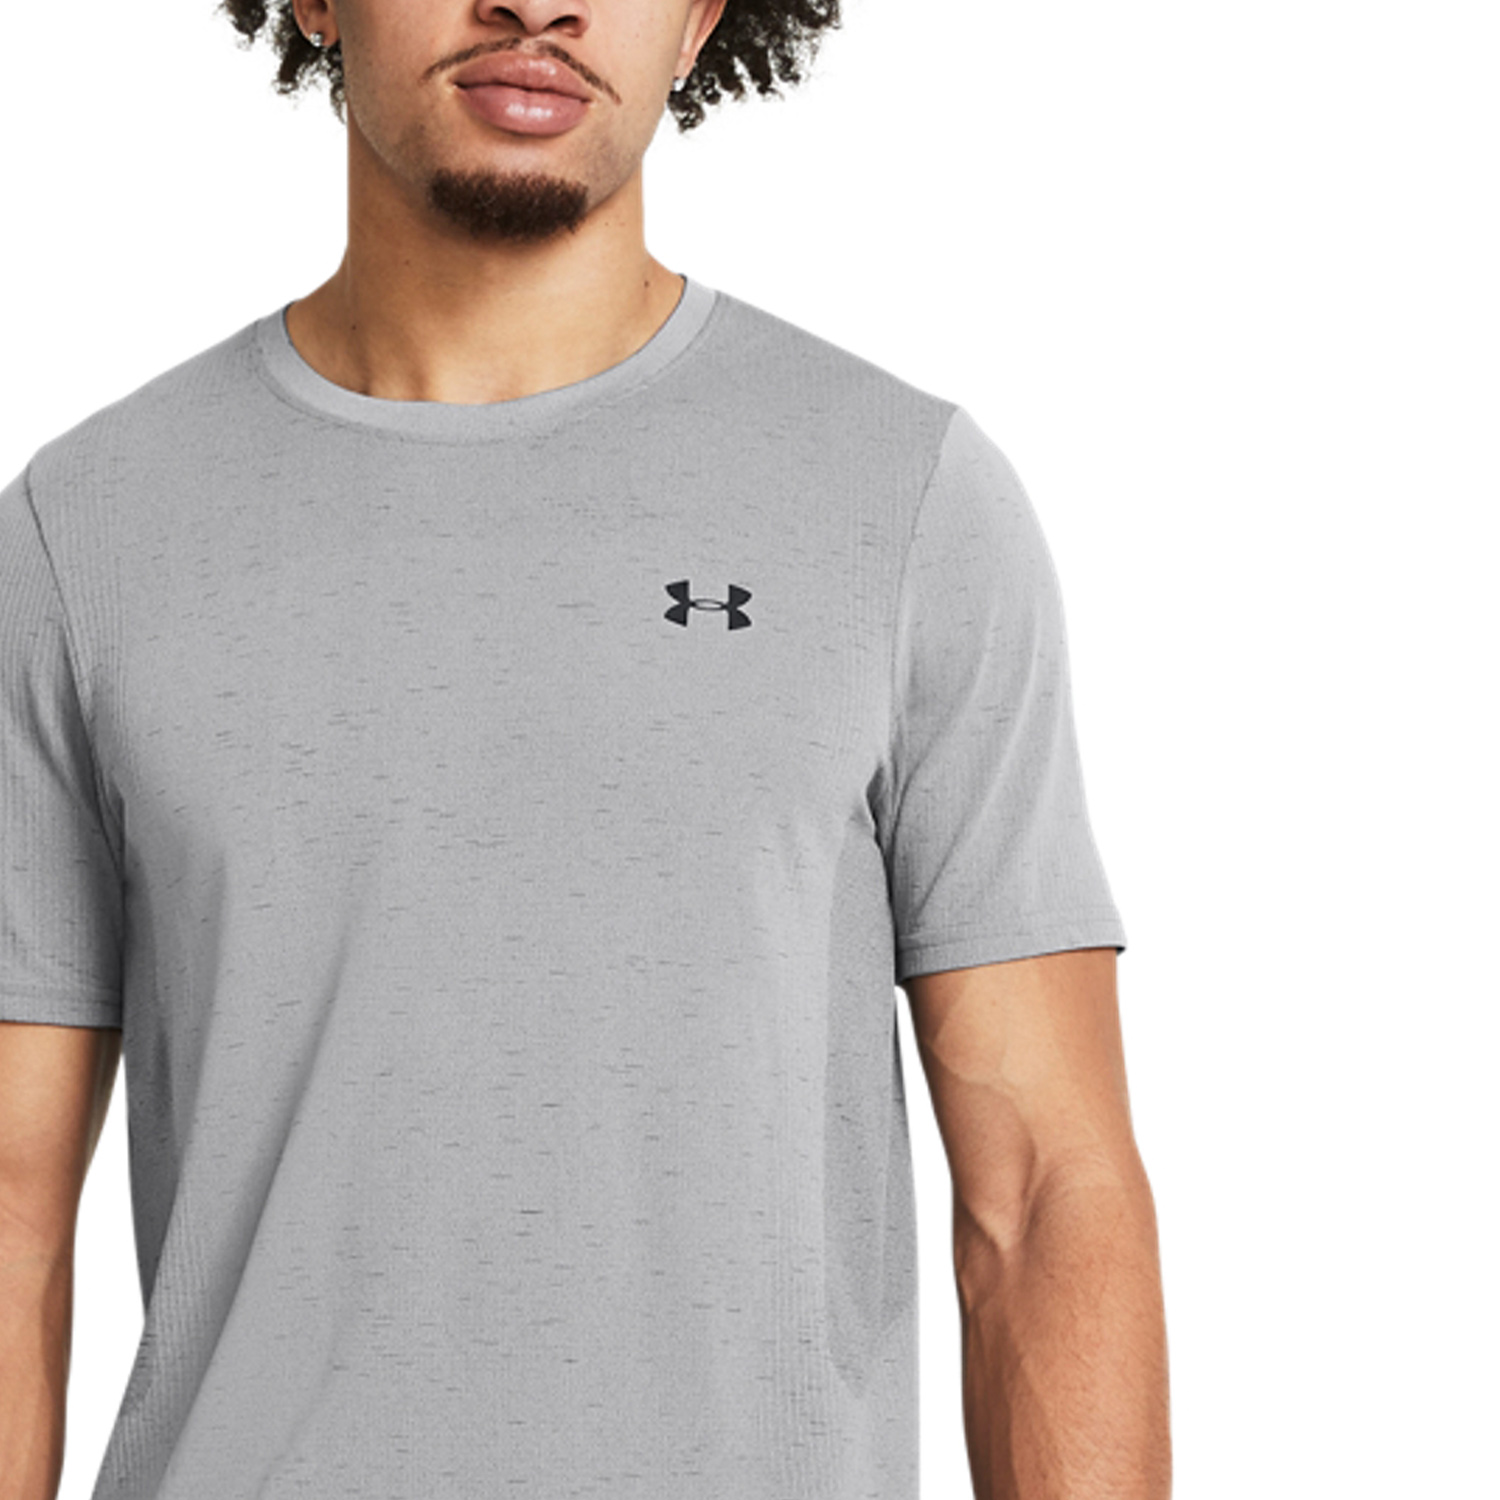 Under Armour Vanish T-Shirt - Mod Gray/Black